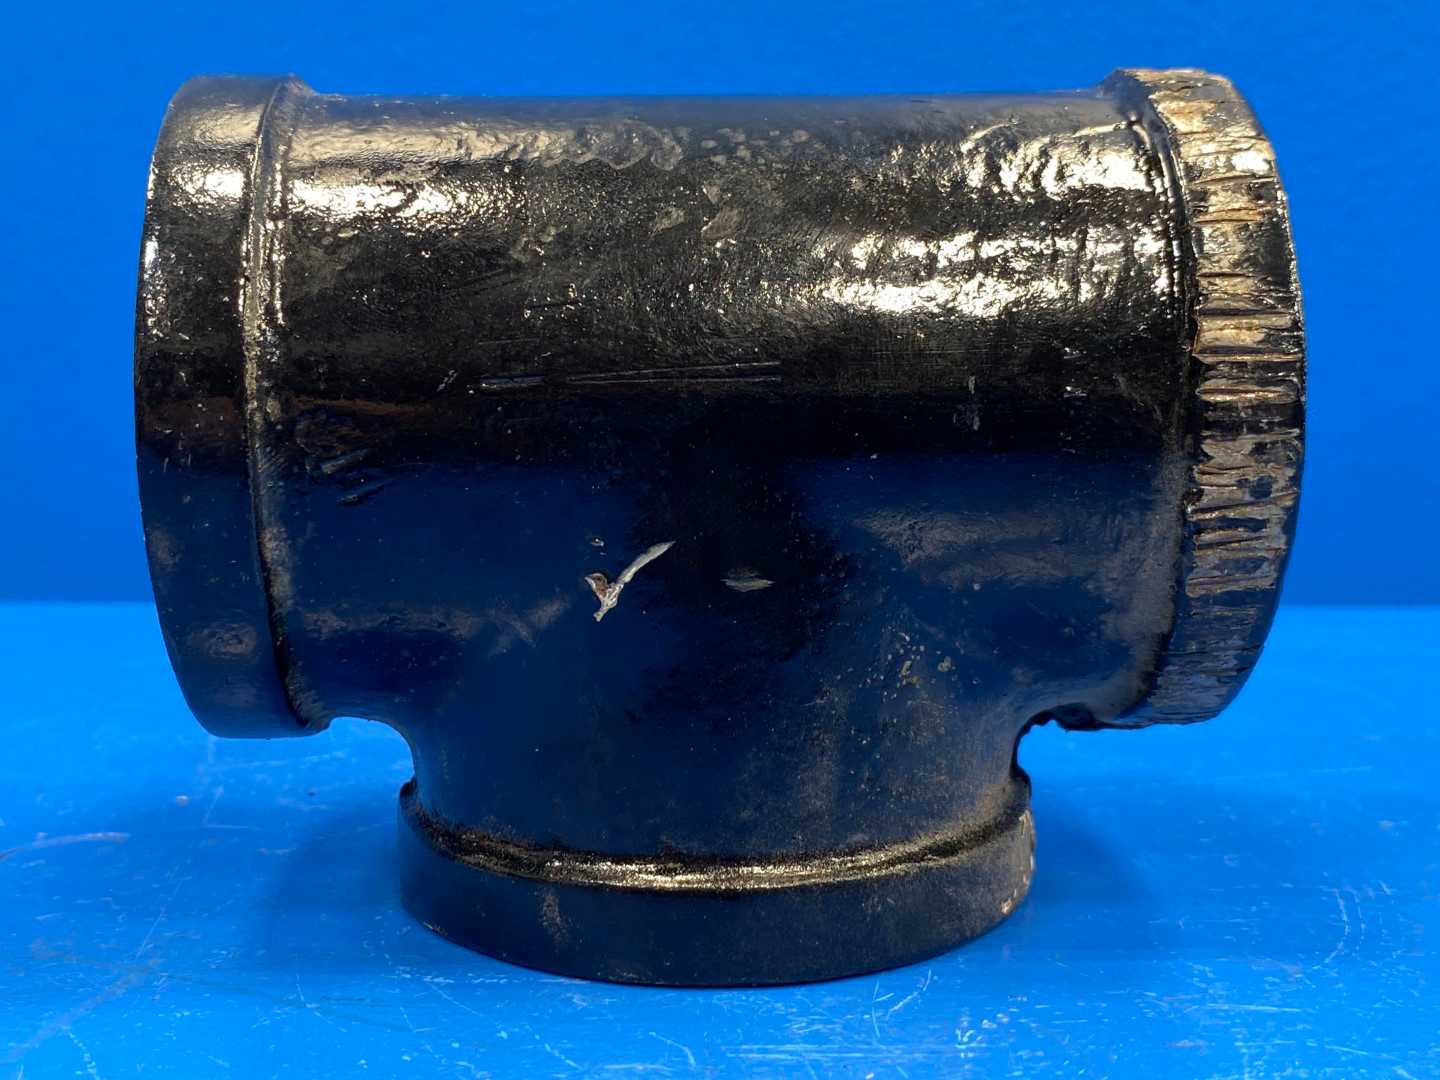 2" F-NPT 150 lb Black Malleable Iron Pipe Tee (466318)